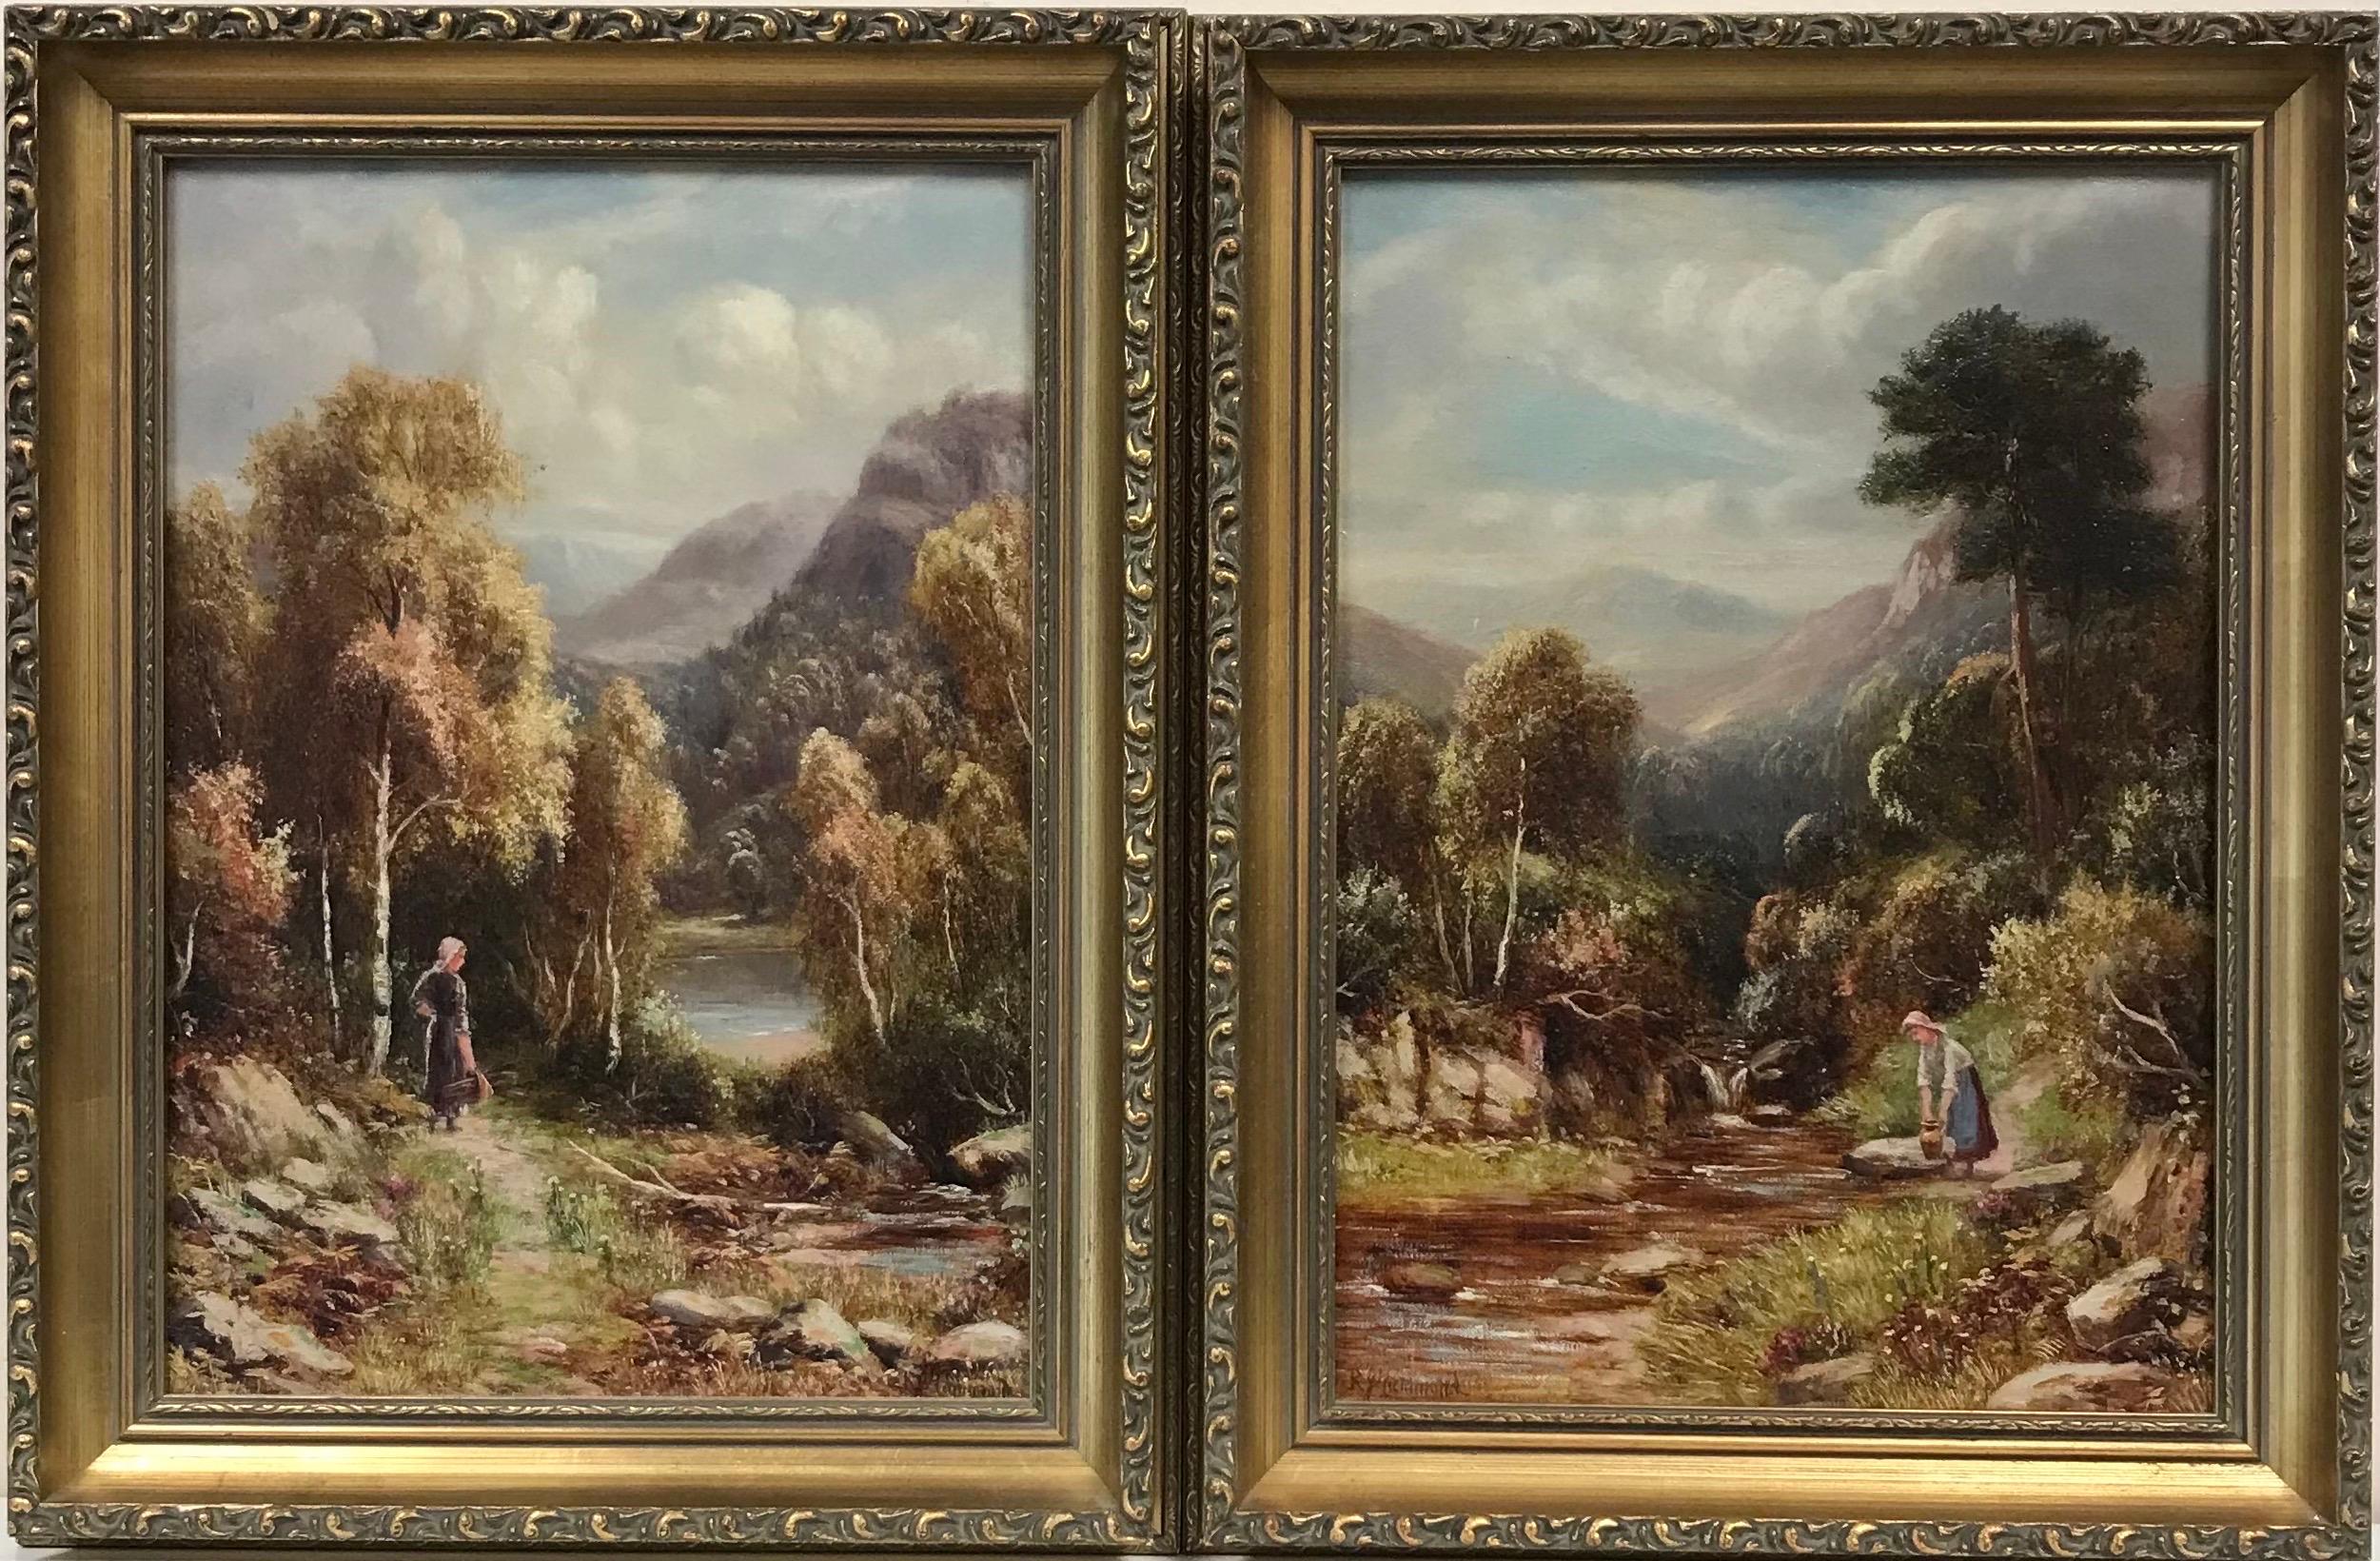 Robert John Hammond (British, exhibited 1882-1911) Landscape Painting - Fine Victorian Pair of Original Oil Paintings Figures Scottish Highland scenes